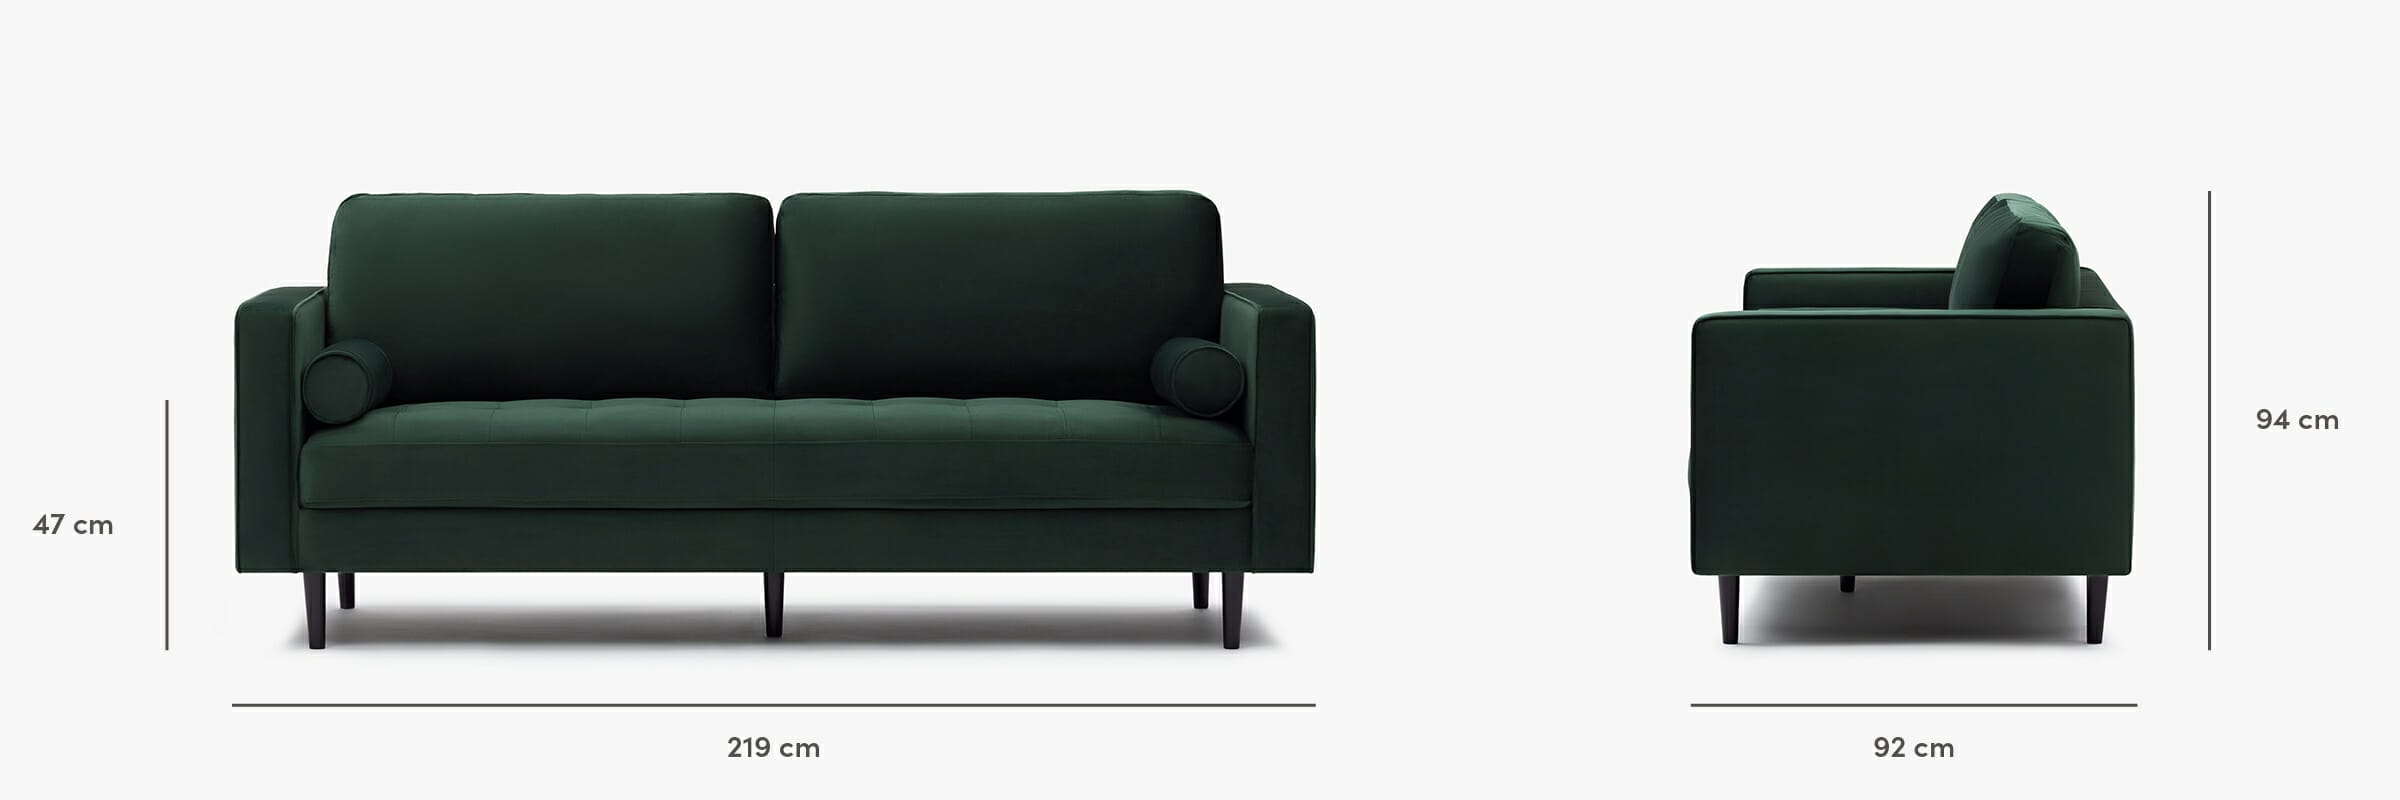 Soho sofa velours - dimensions